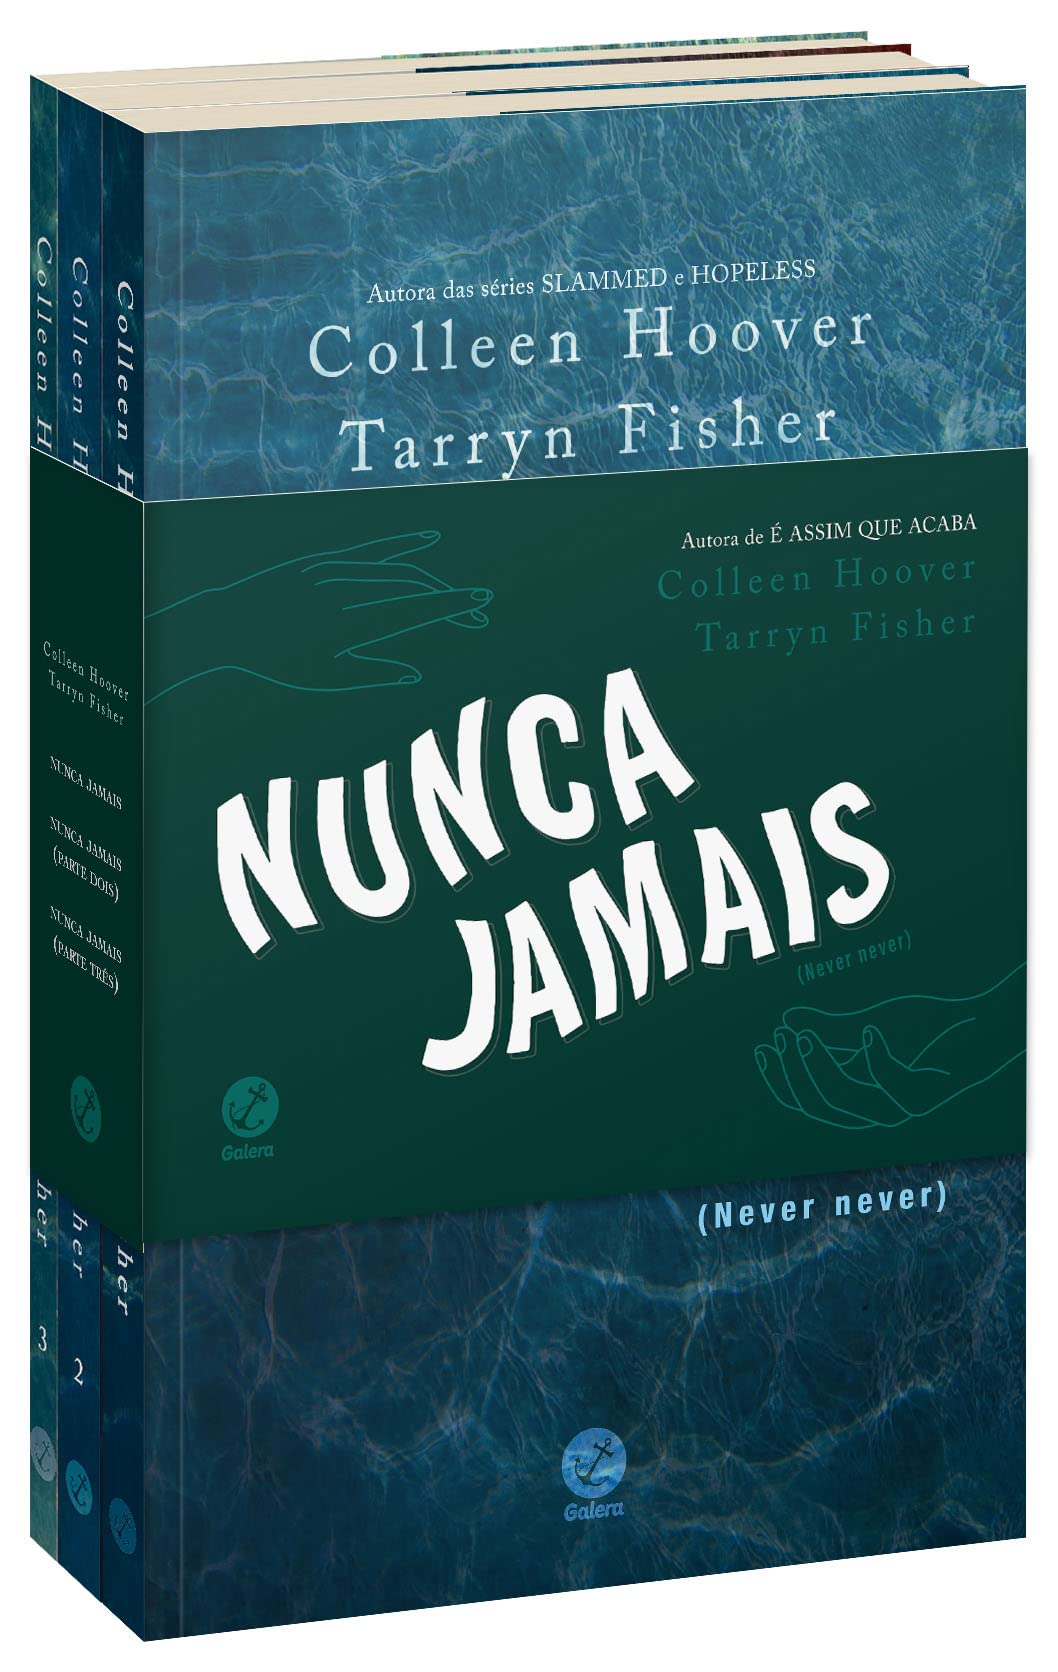 Resenha do Livro: Nunca Jamais - Colleen Hoover